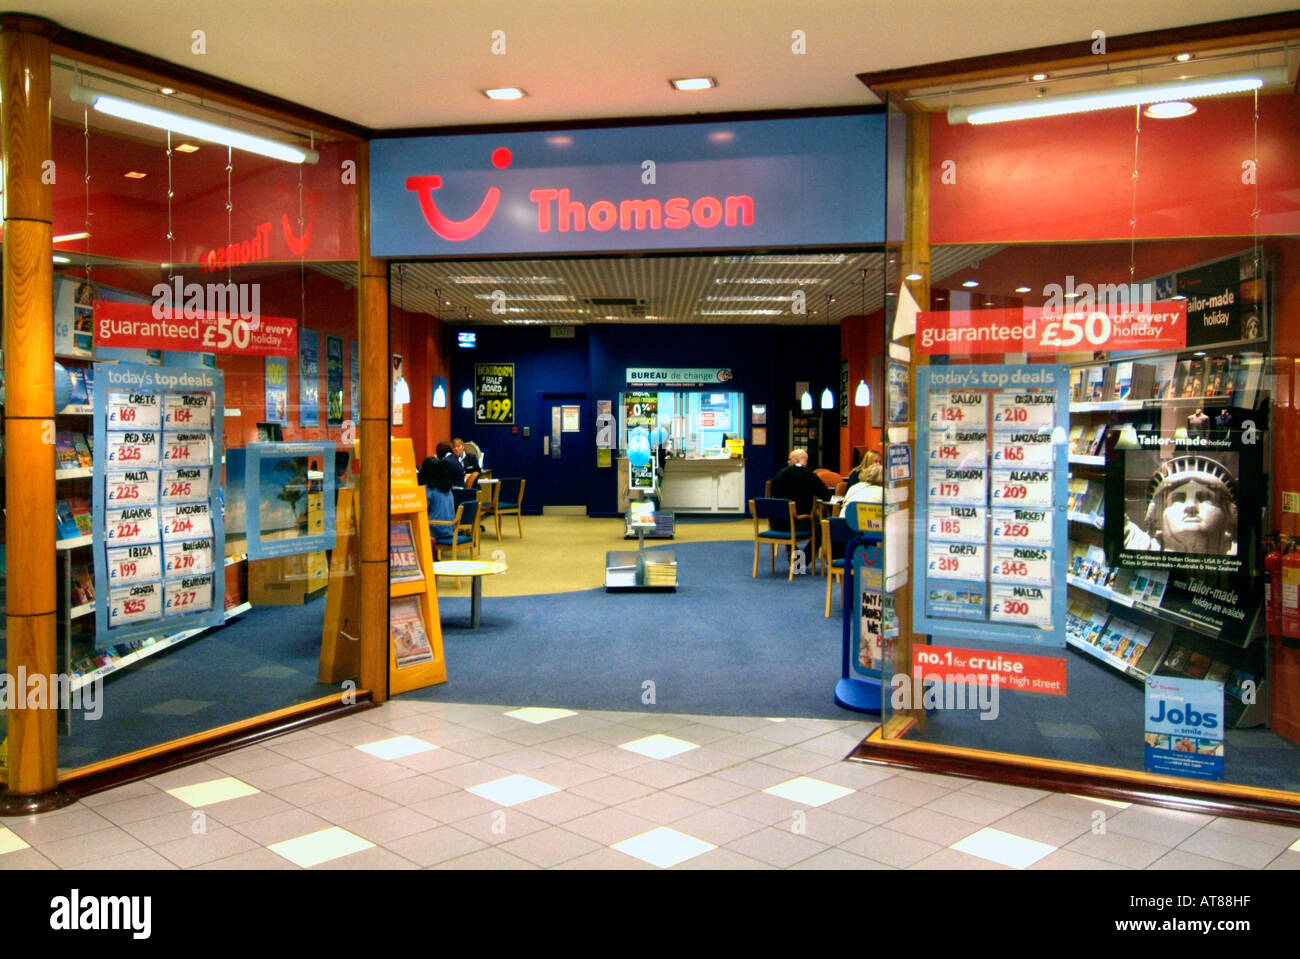 thomson travel agent shop store UK United Kingdom England Europe GB Great Britain EU European Union Stock Photo